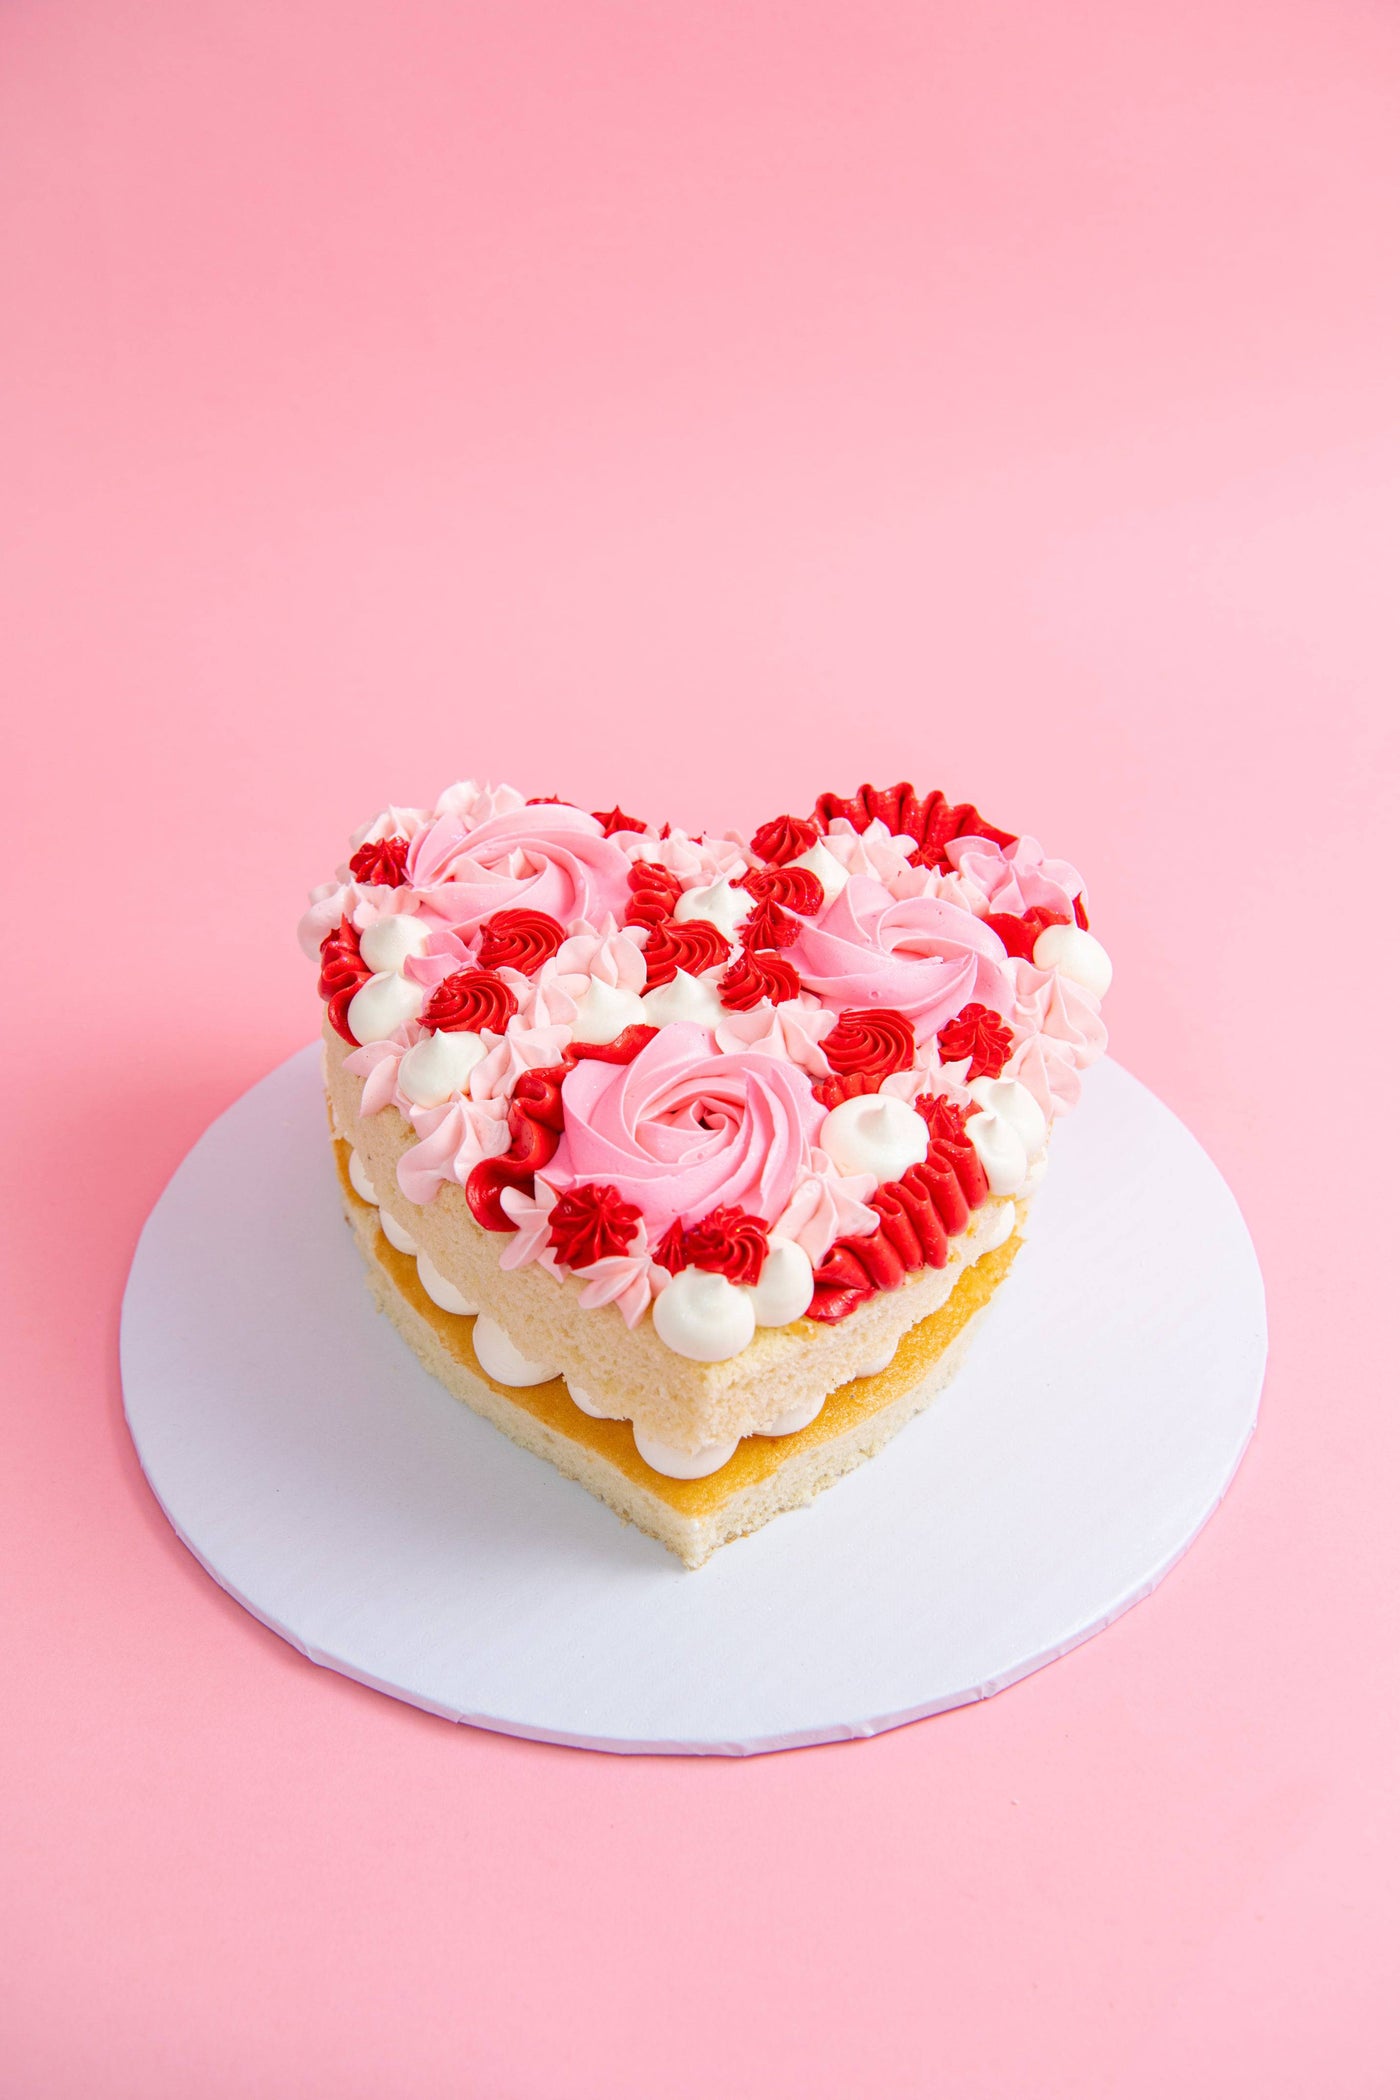 Heart Shaped Cake Images - Free Download on Freepik